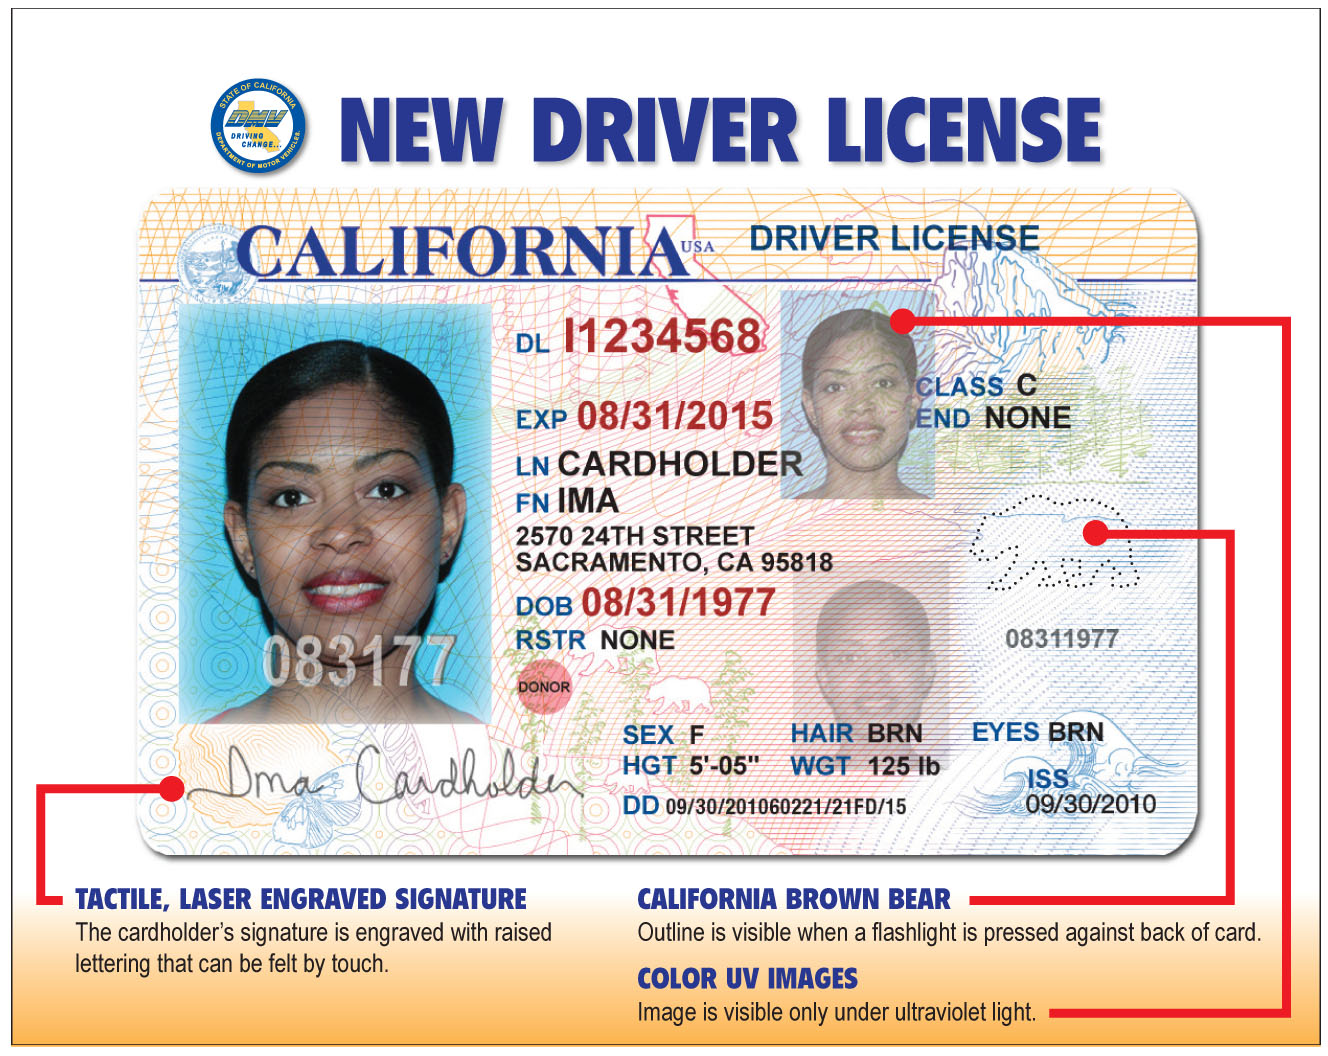 find a driver's license number